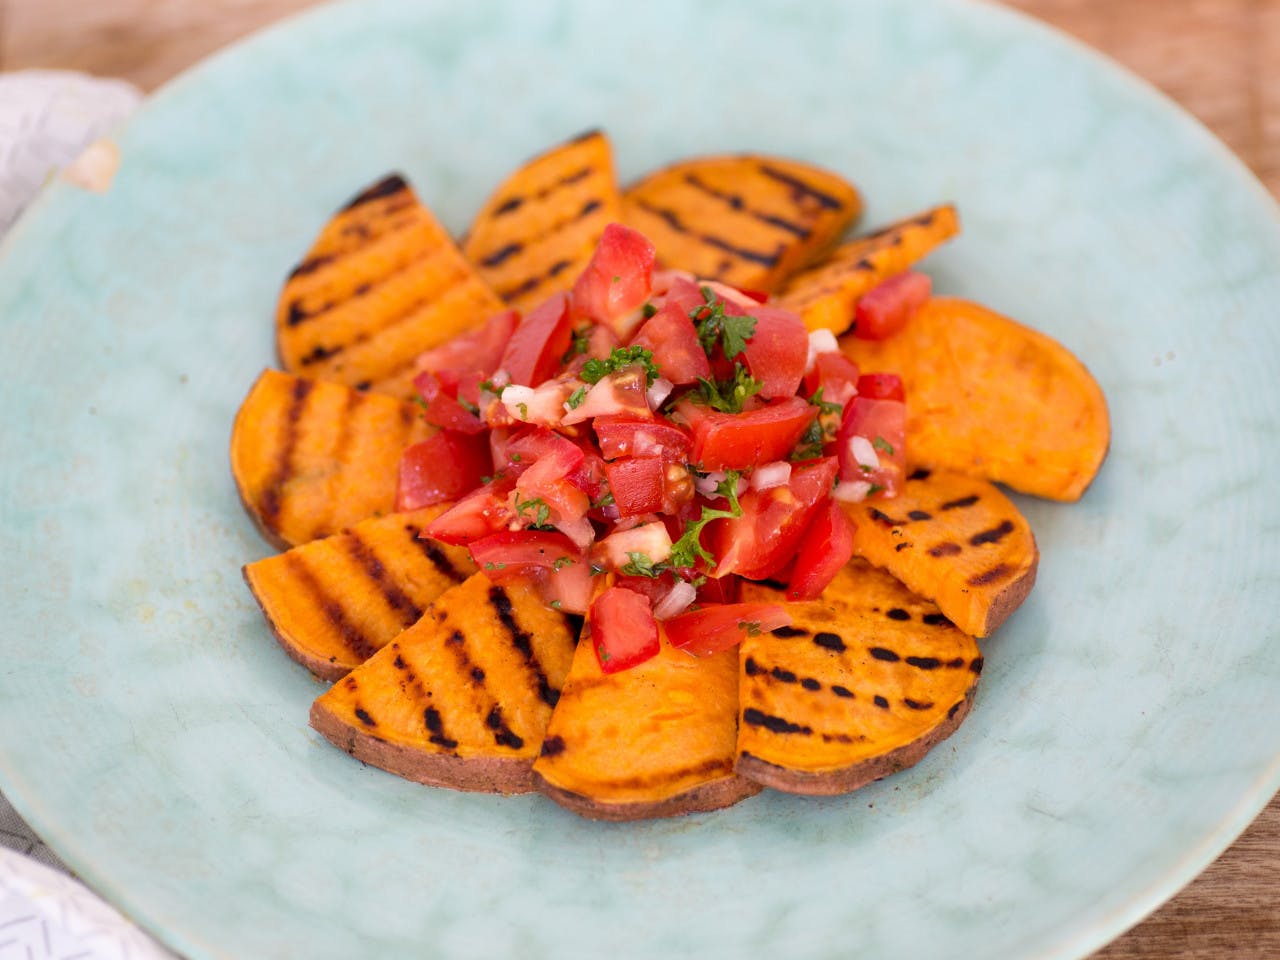 Grilled sweet potato with tomato salsa